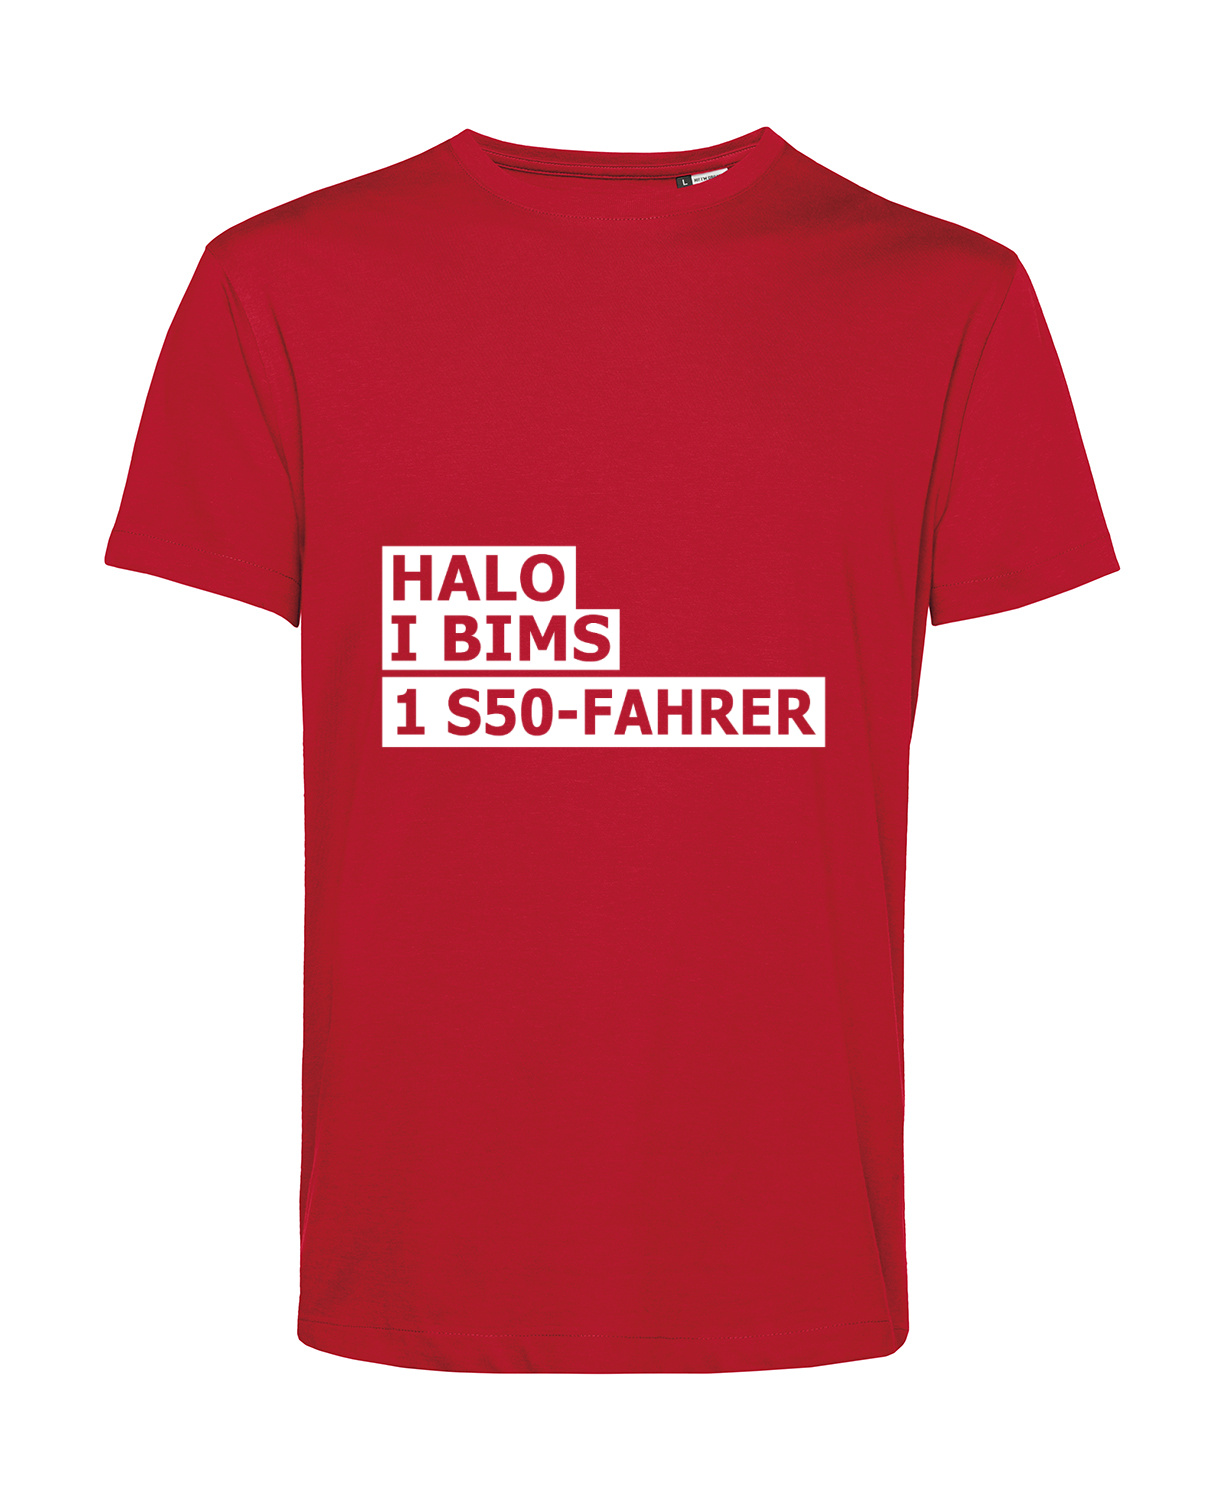 Nachhaltiges T-Shirt Herren 2Takter - Halo I bims 1 S50-Fahrer